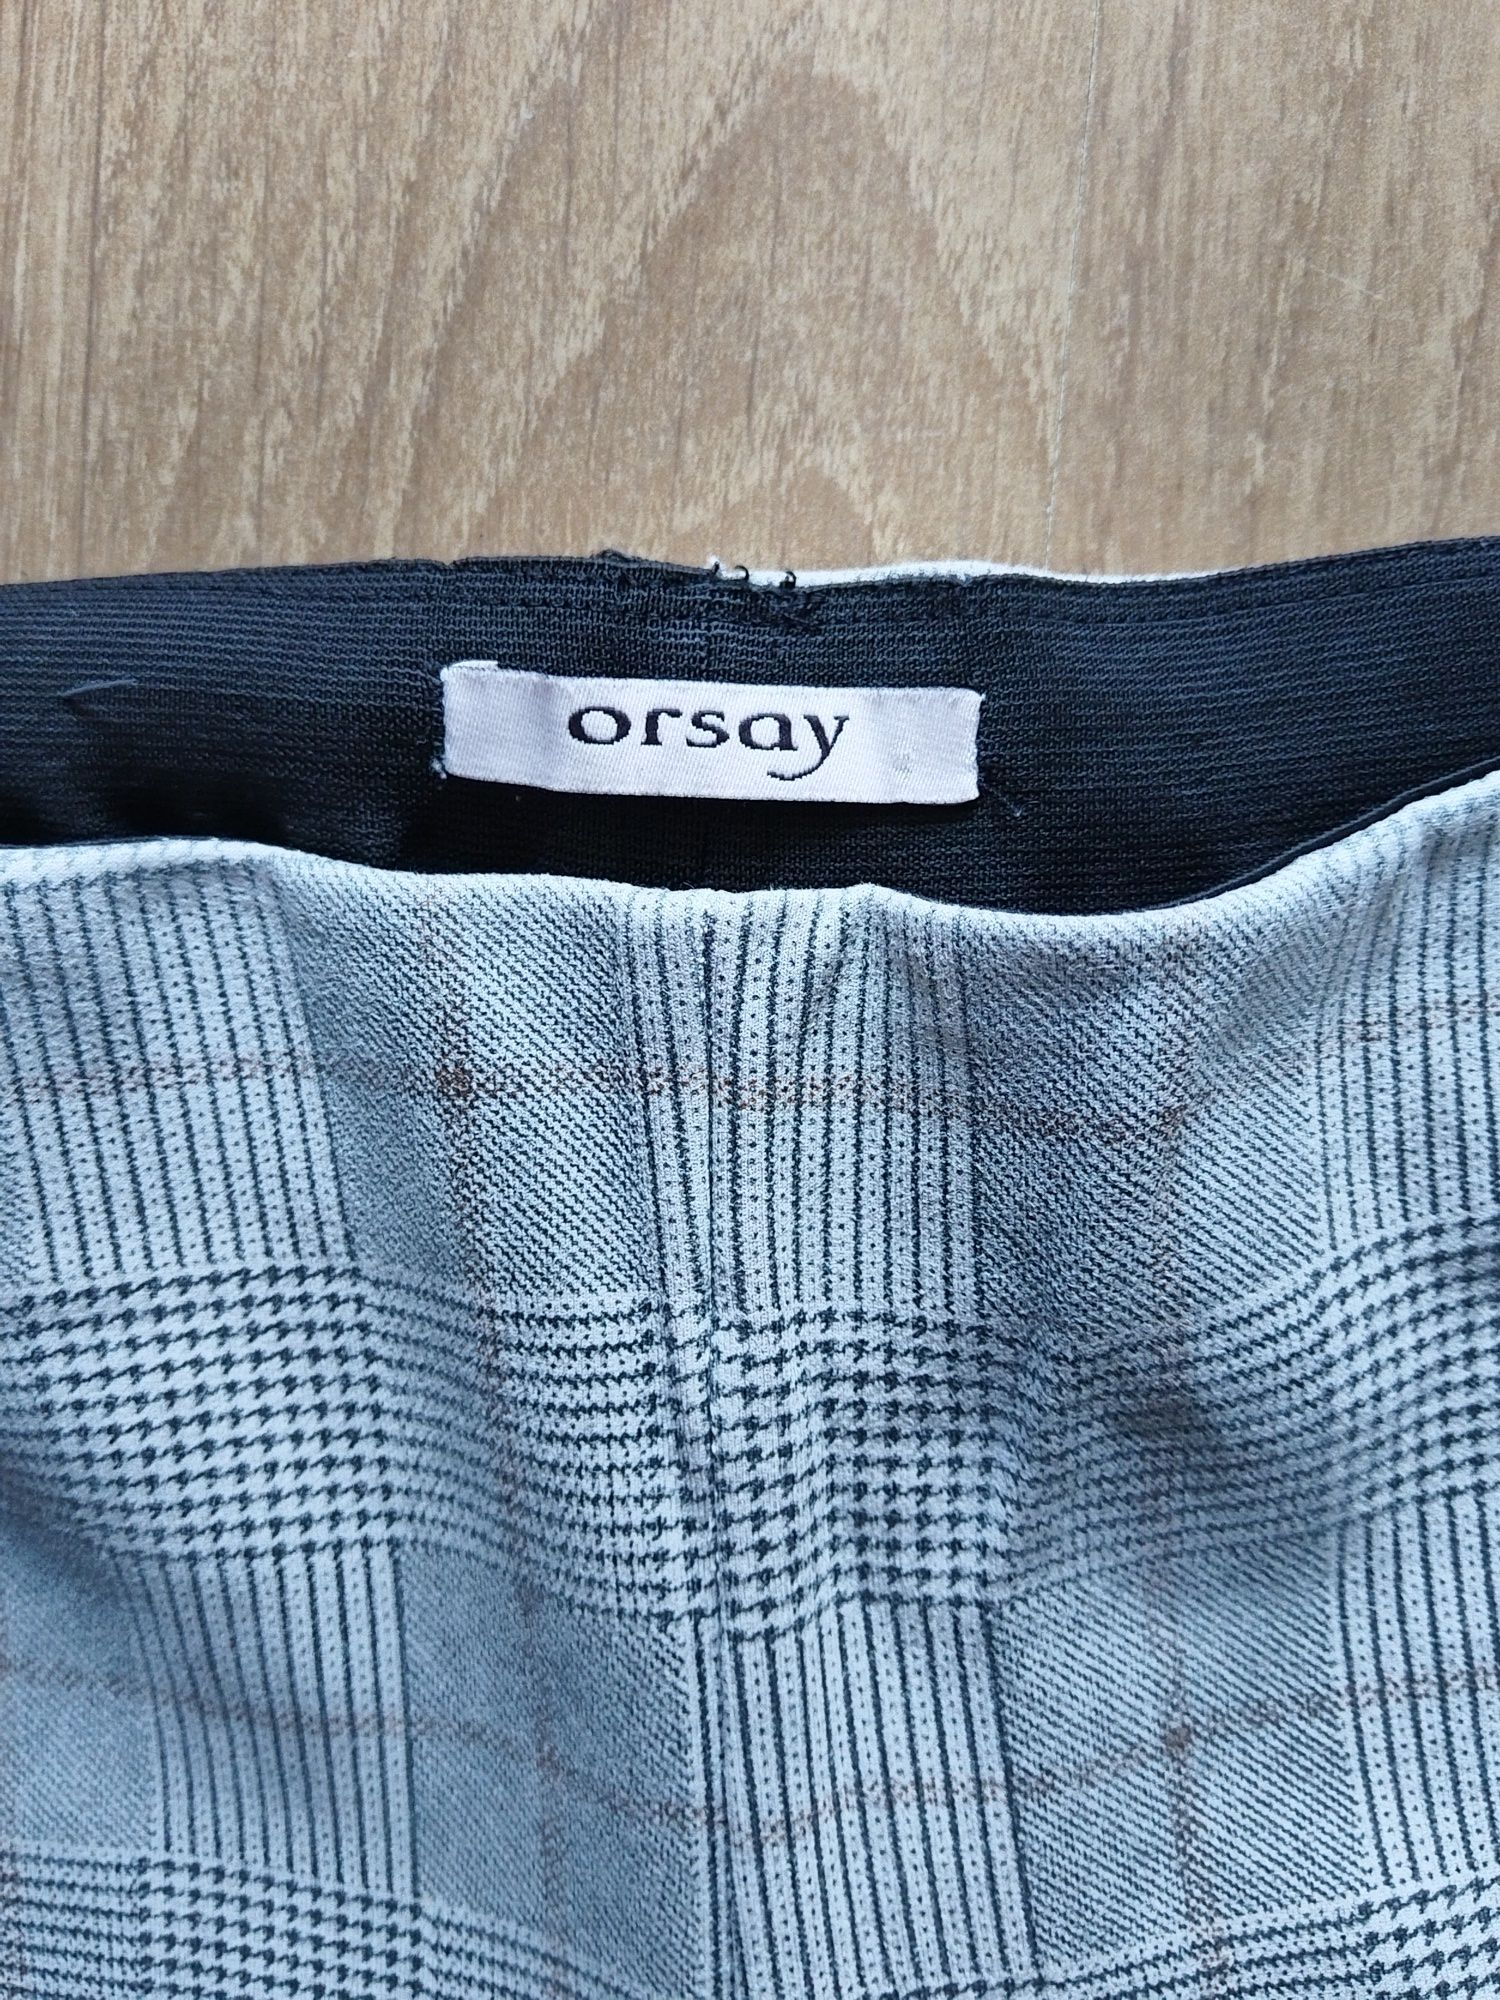 Spodnie damskie rozmiar M firmy Orsay